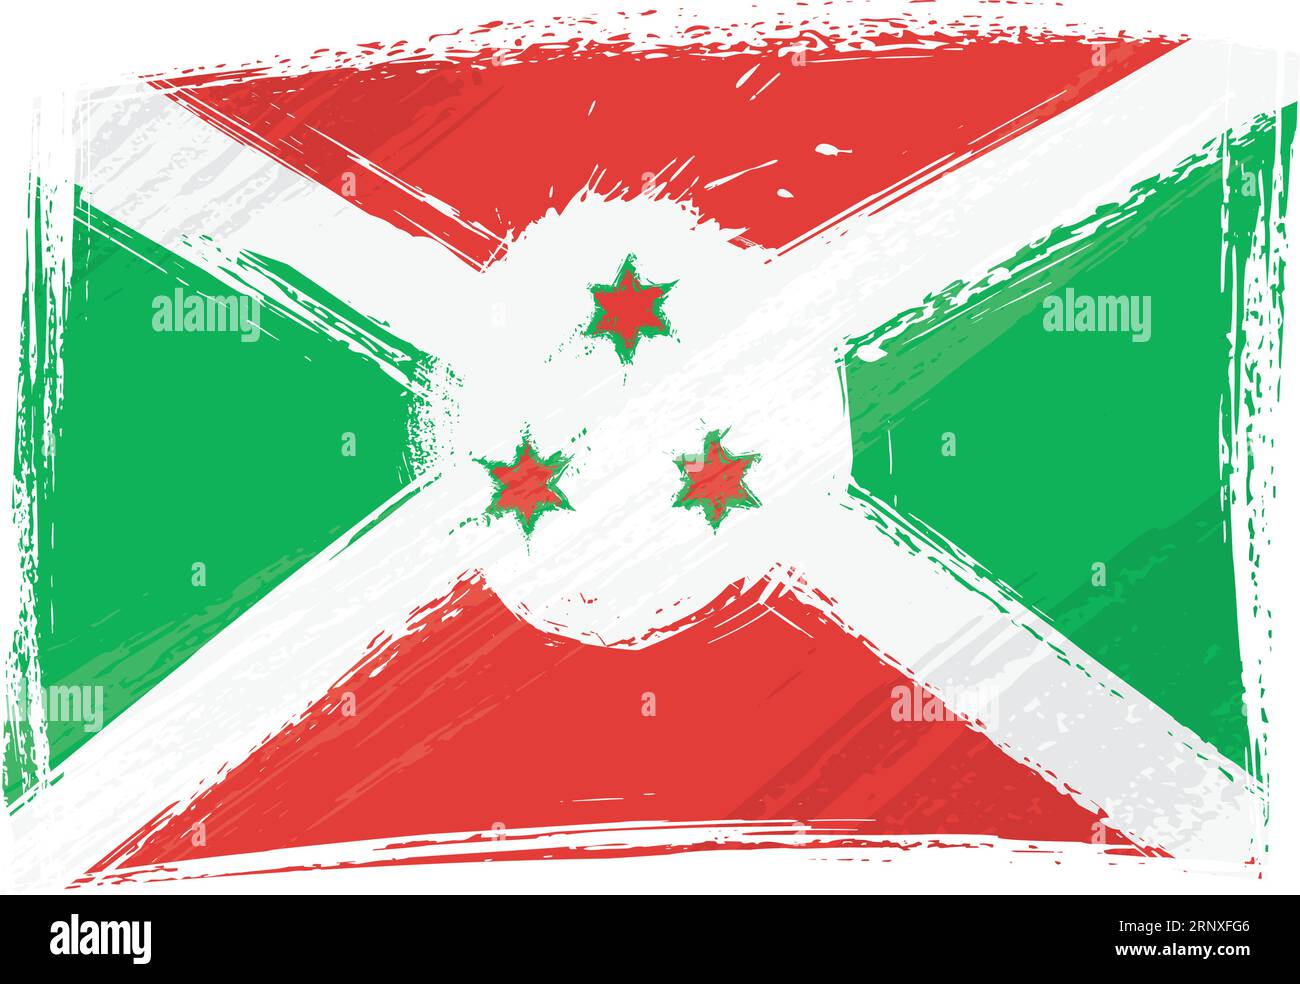 Burundi national flag created in grunge paint, style Stock Vector